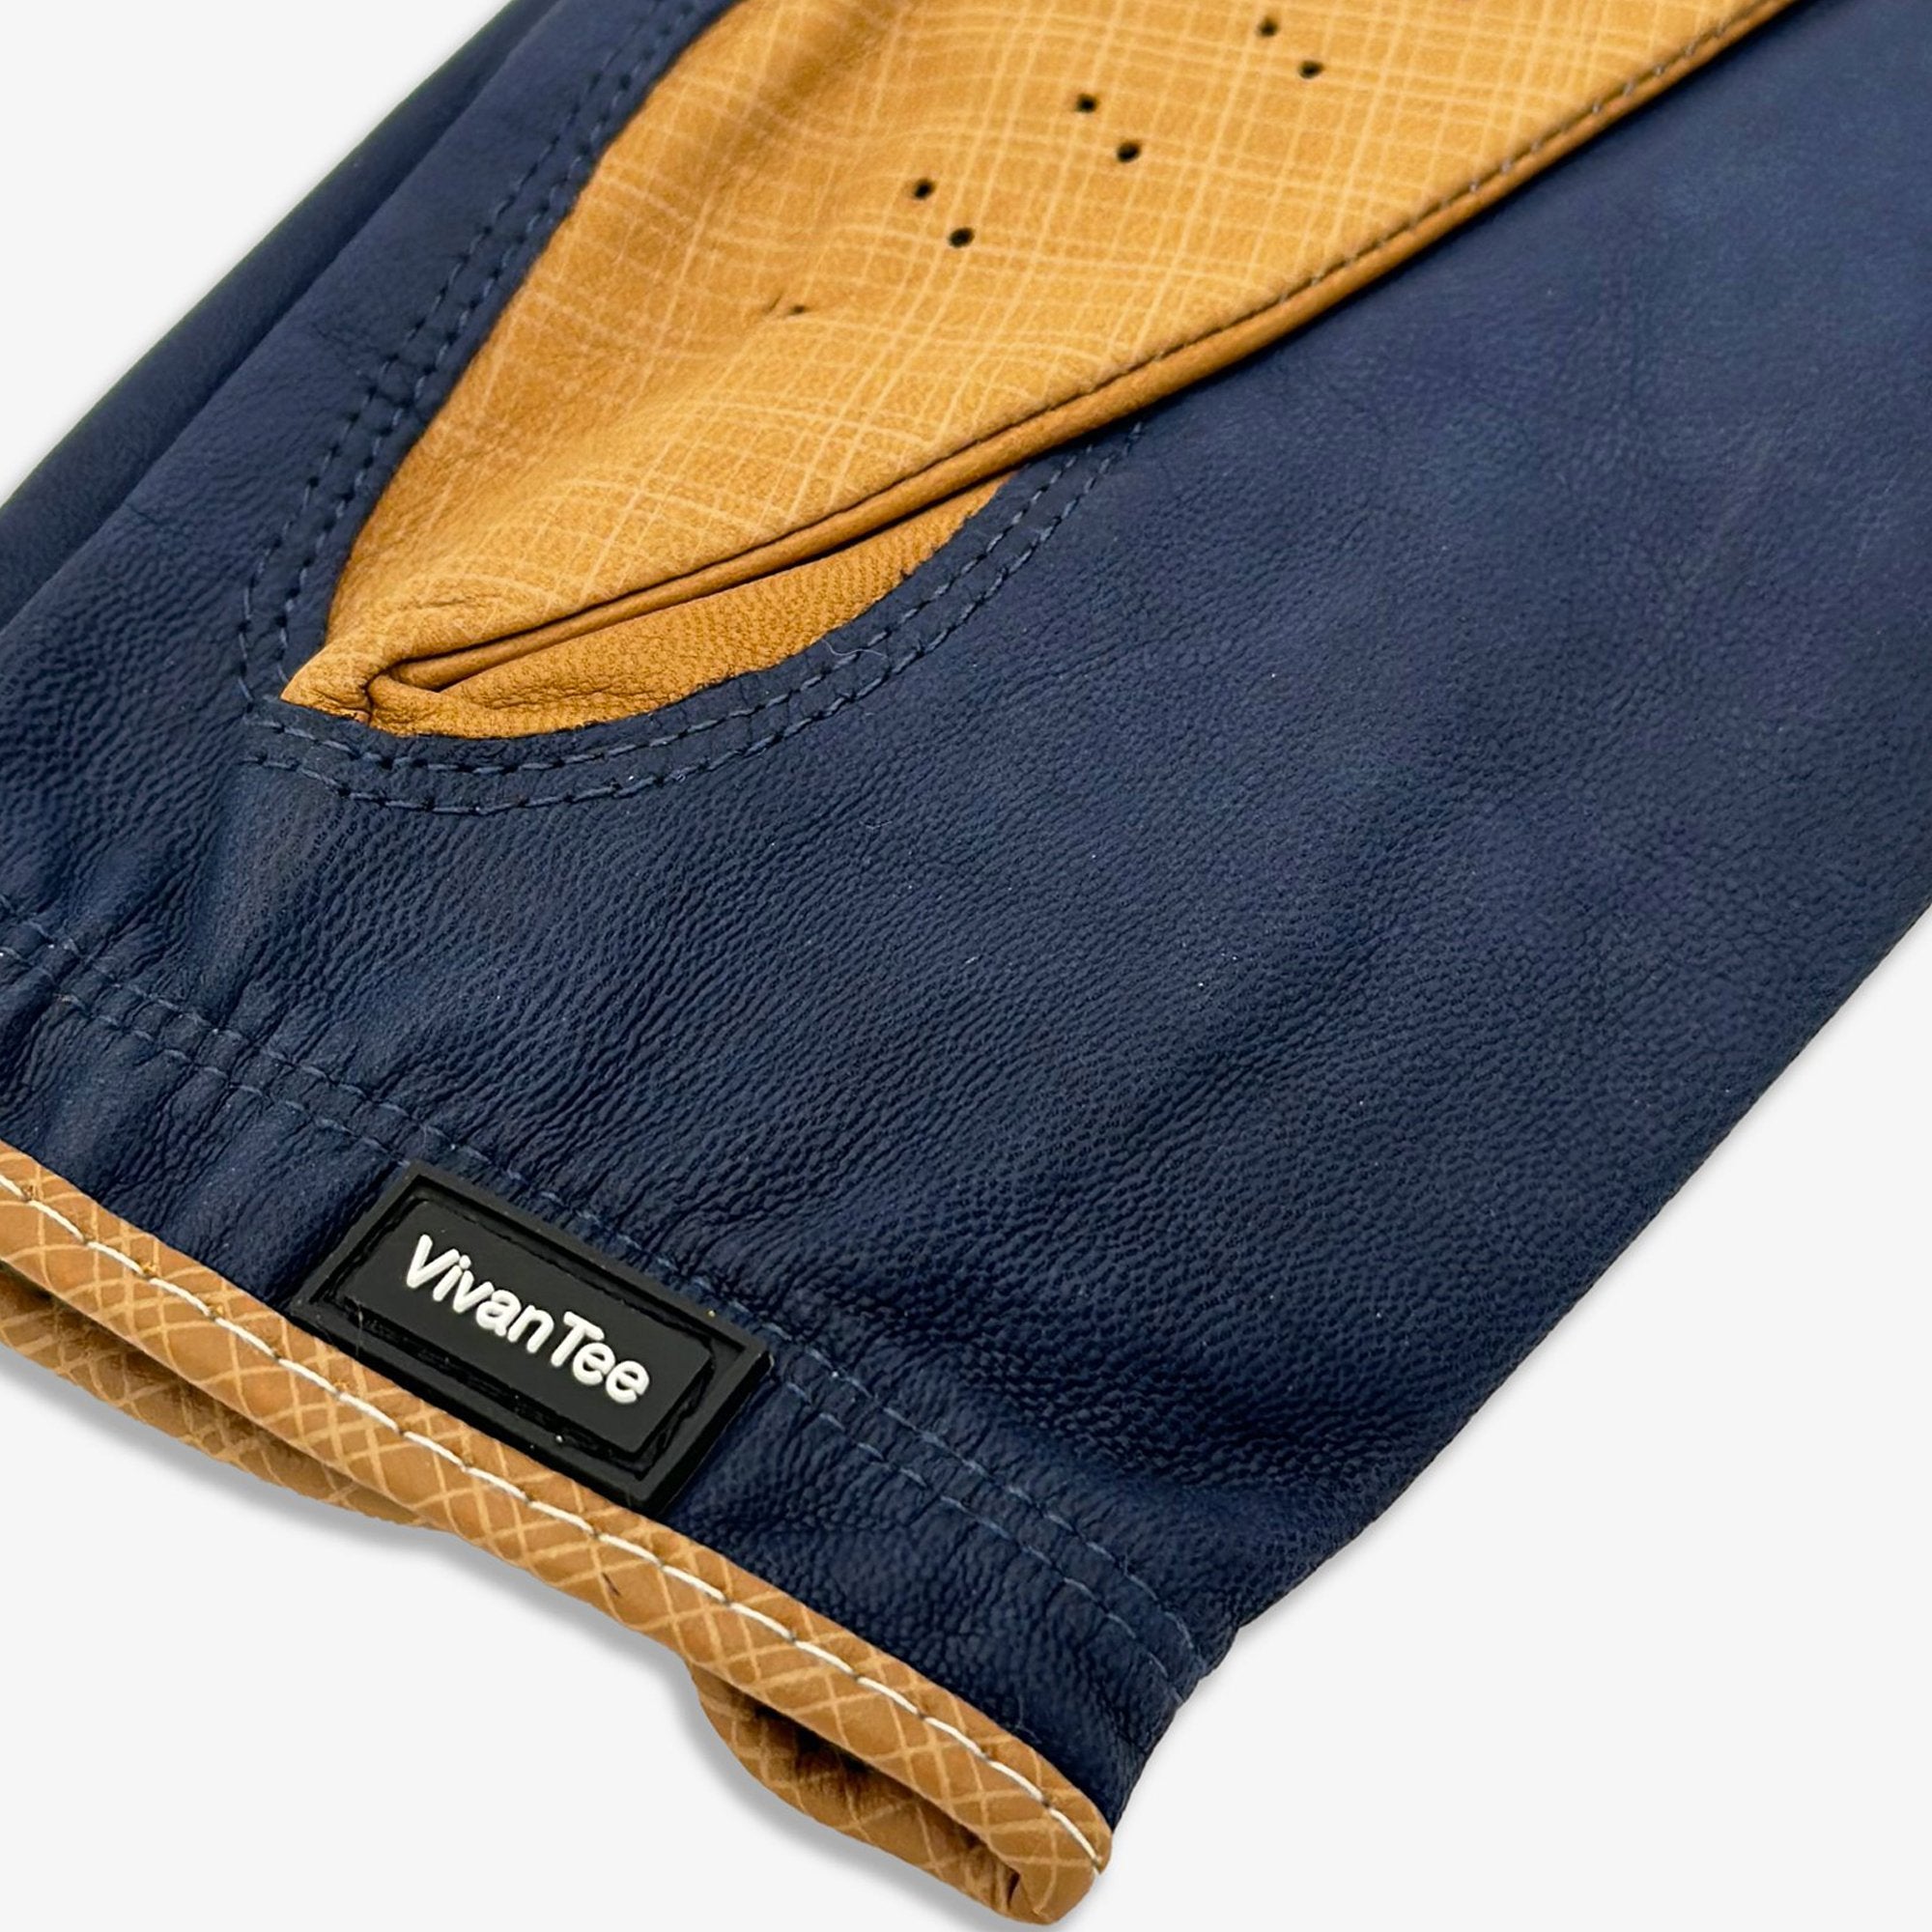 Closeup navy blue golf glove and brown with a VivanTee pull tab logo.